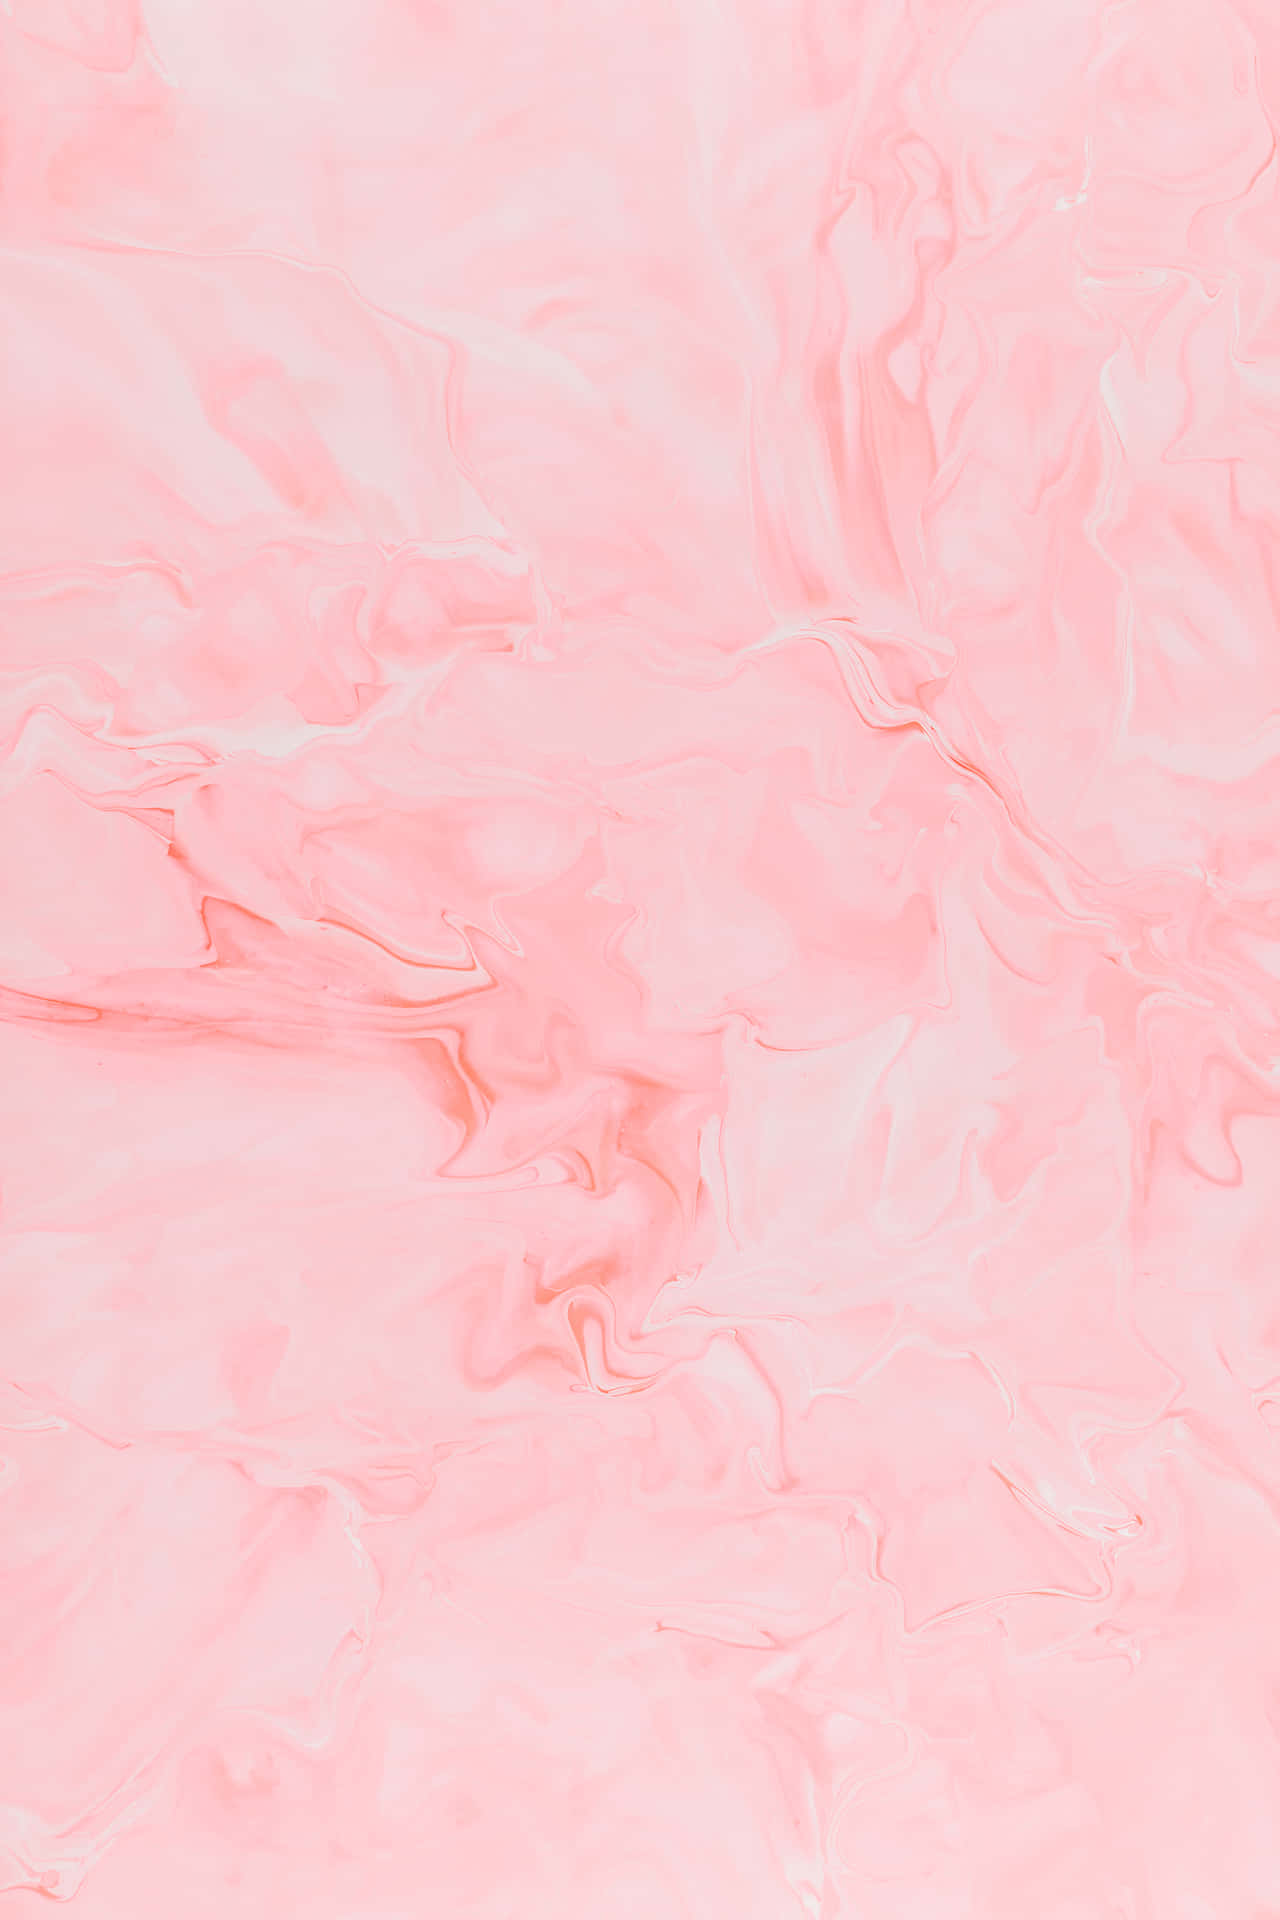 Simple Pink Marble Wallpaper